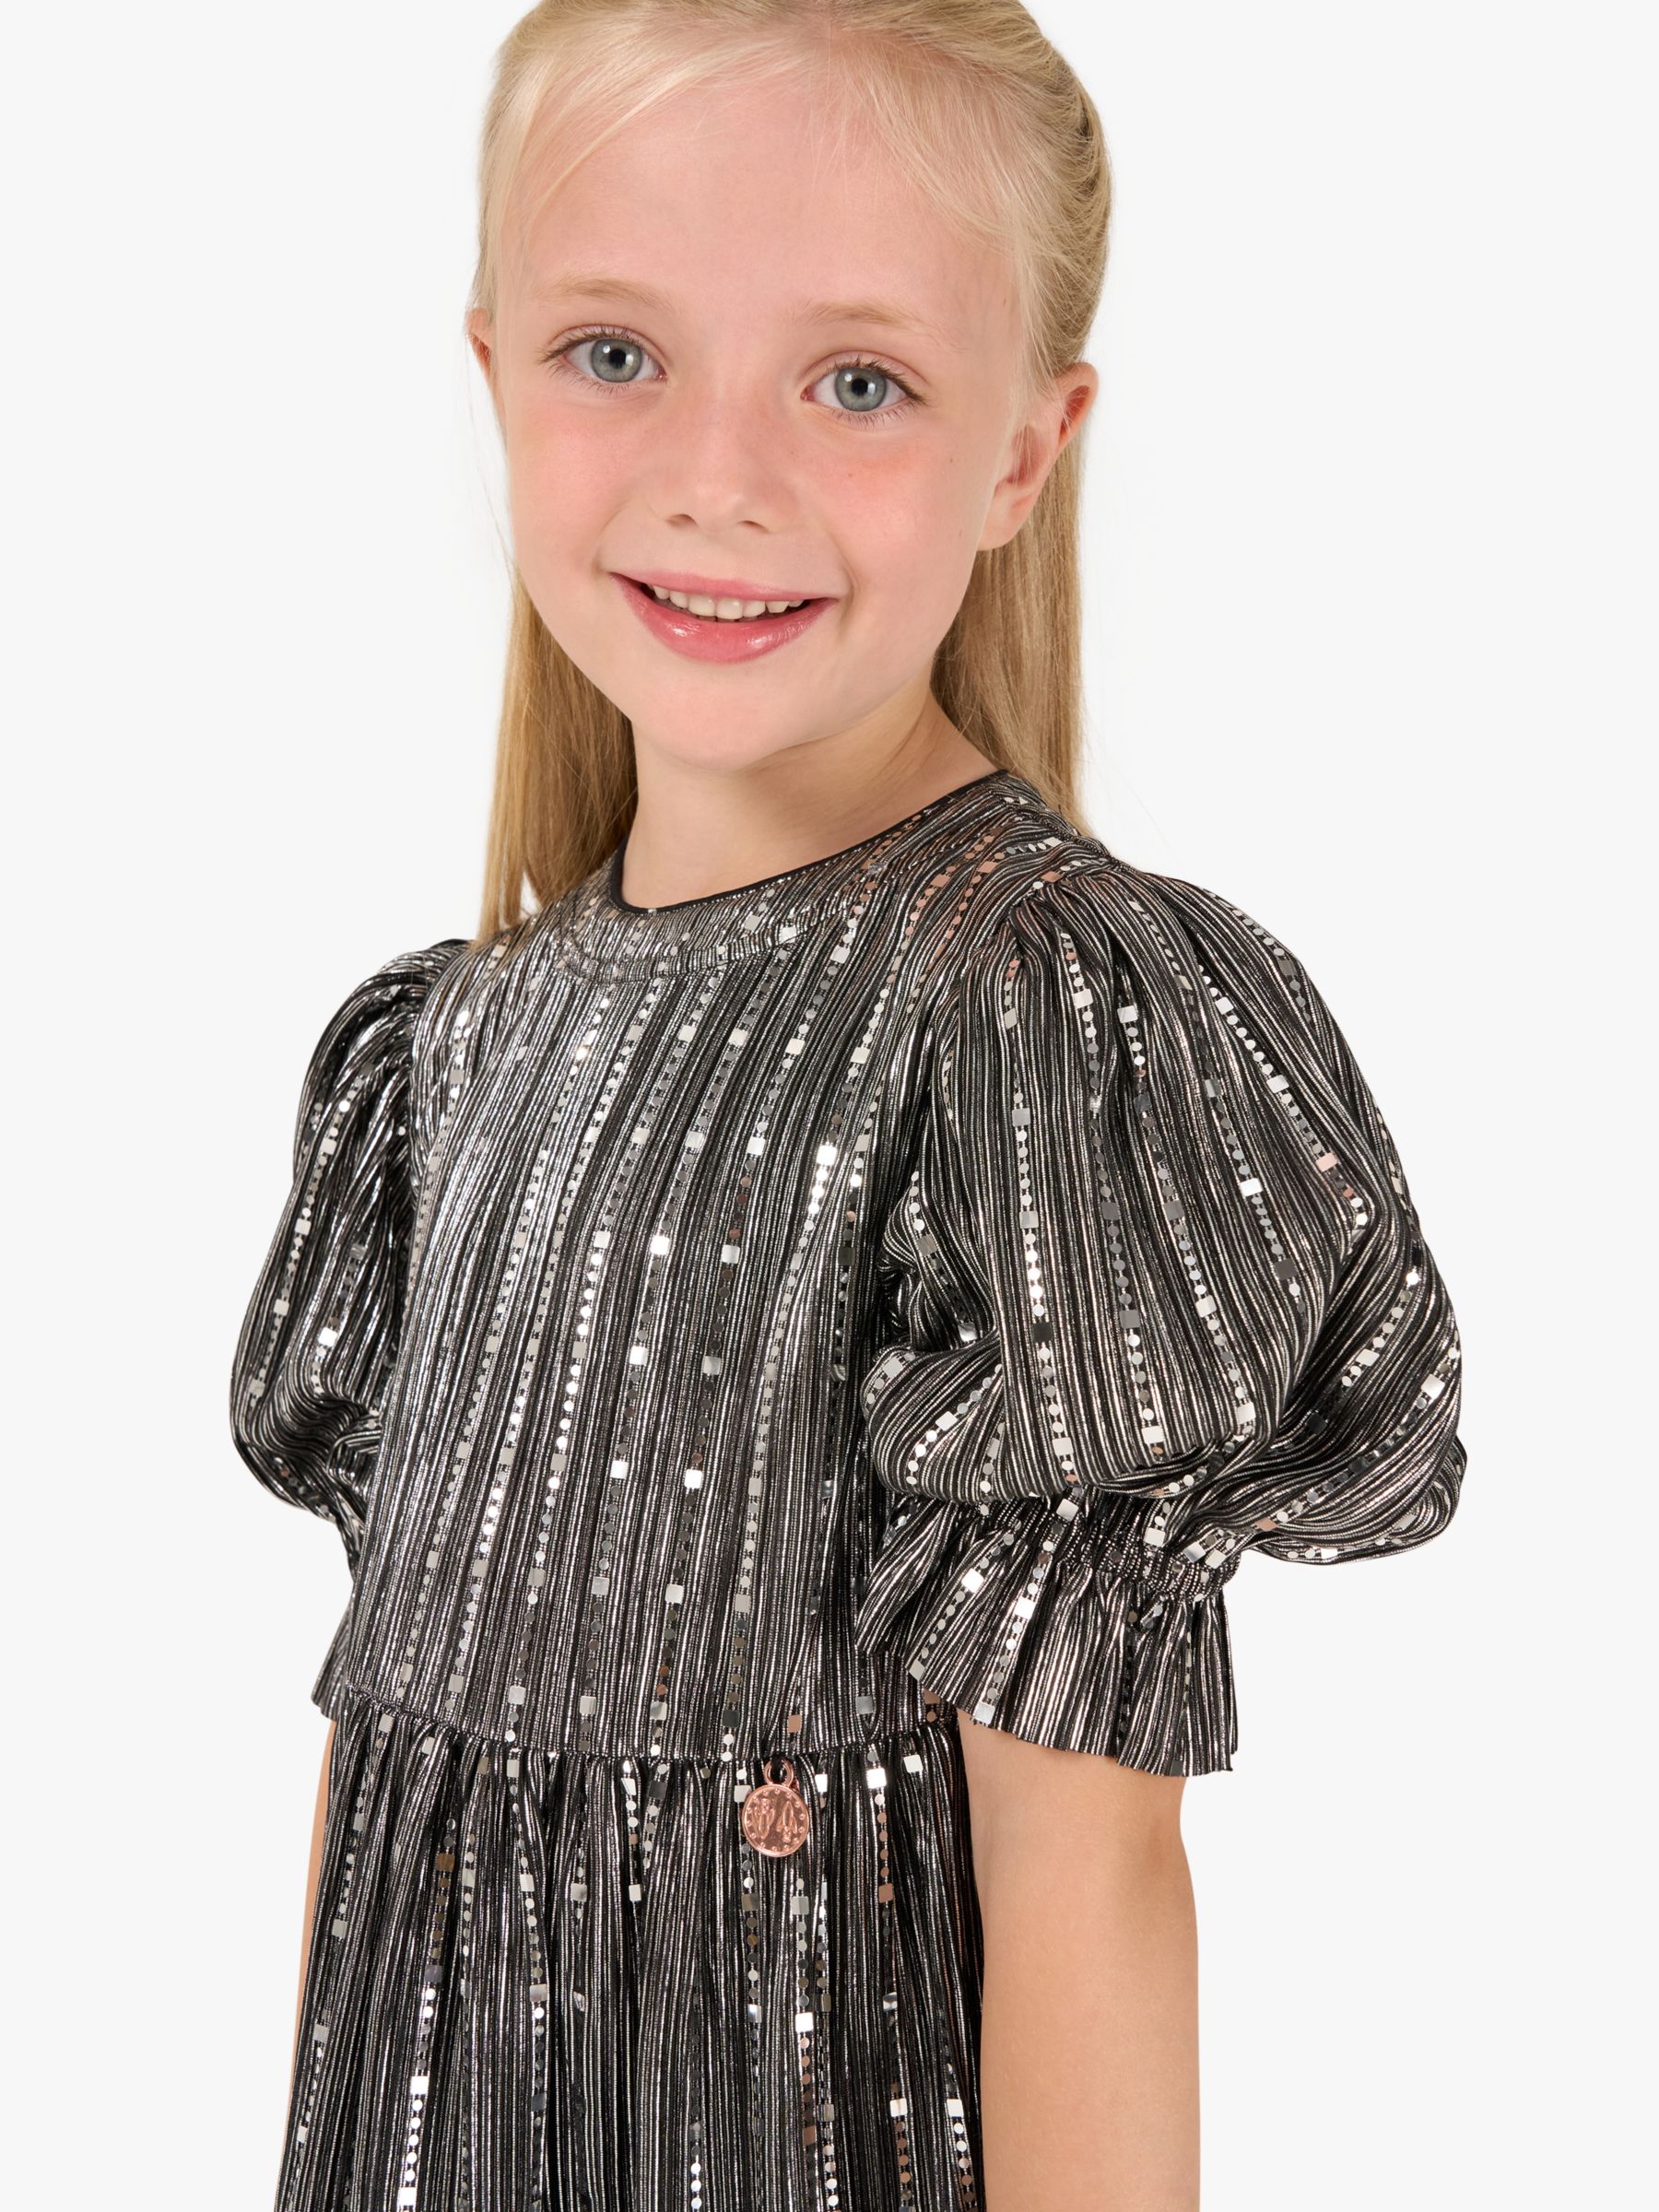 Buy Angel & Rocket Kids' Mila Metallic Sequin Dress, Silver Online at johnlewis.com